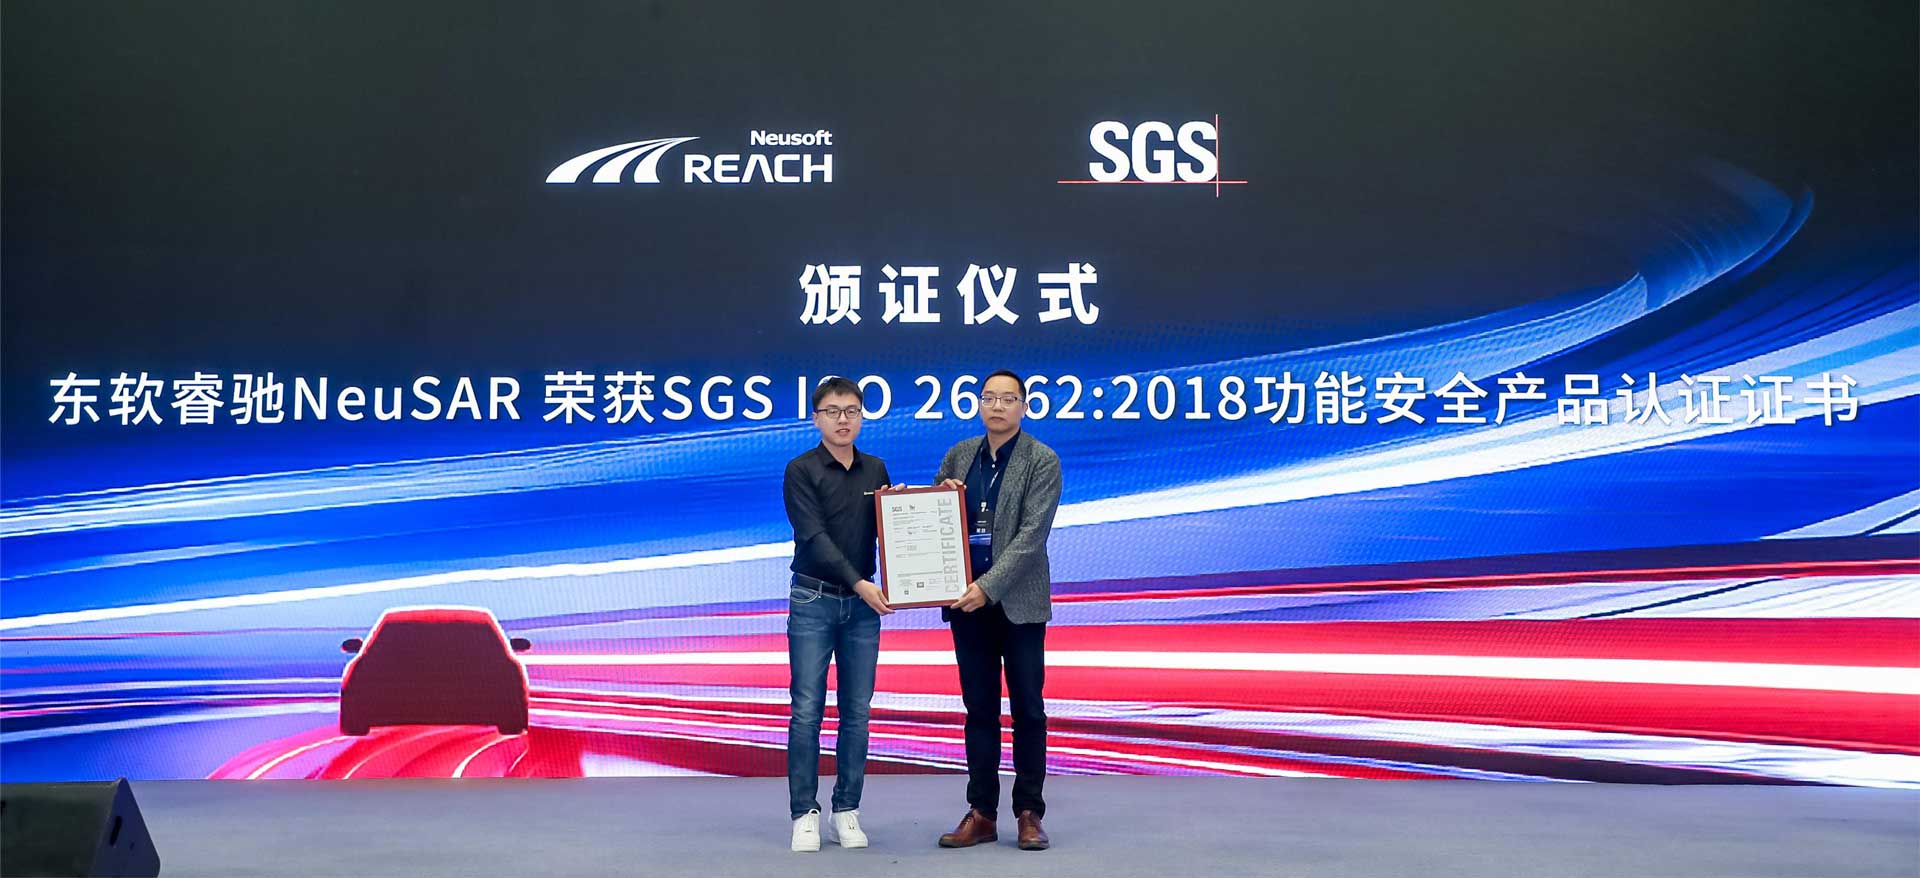 SGS-certification